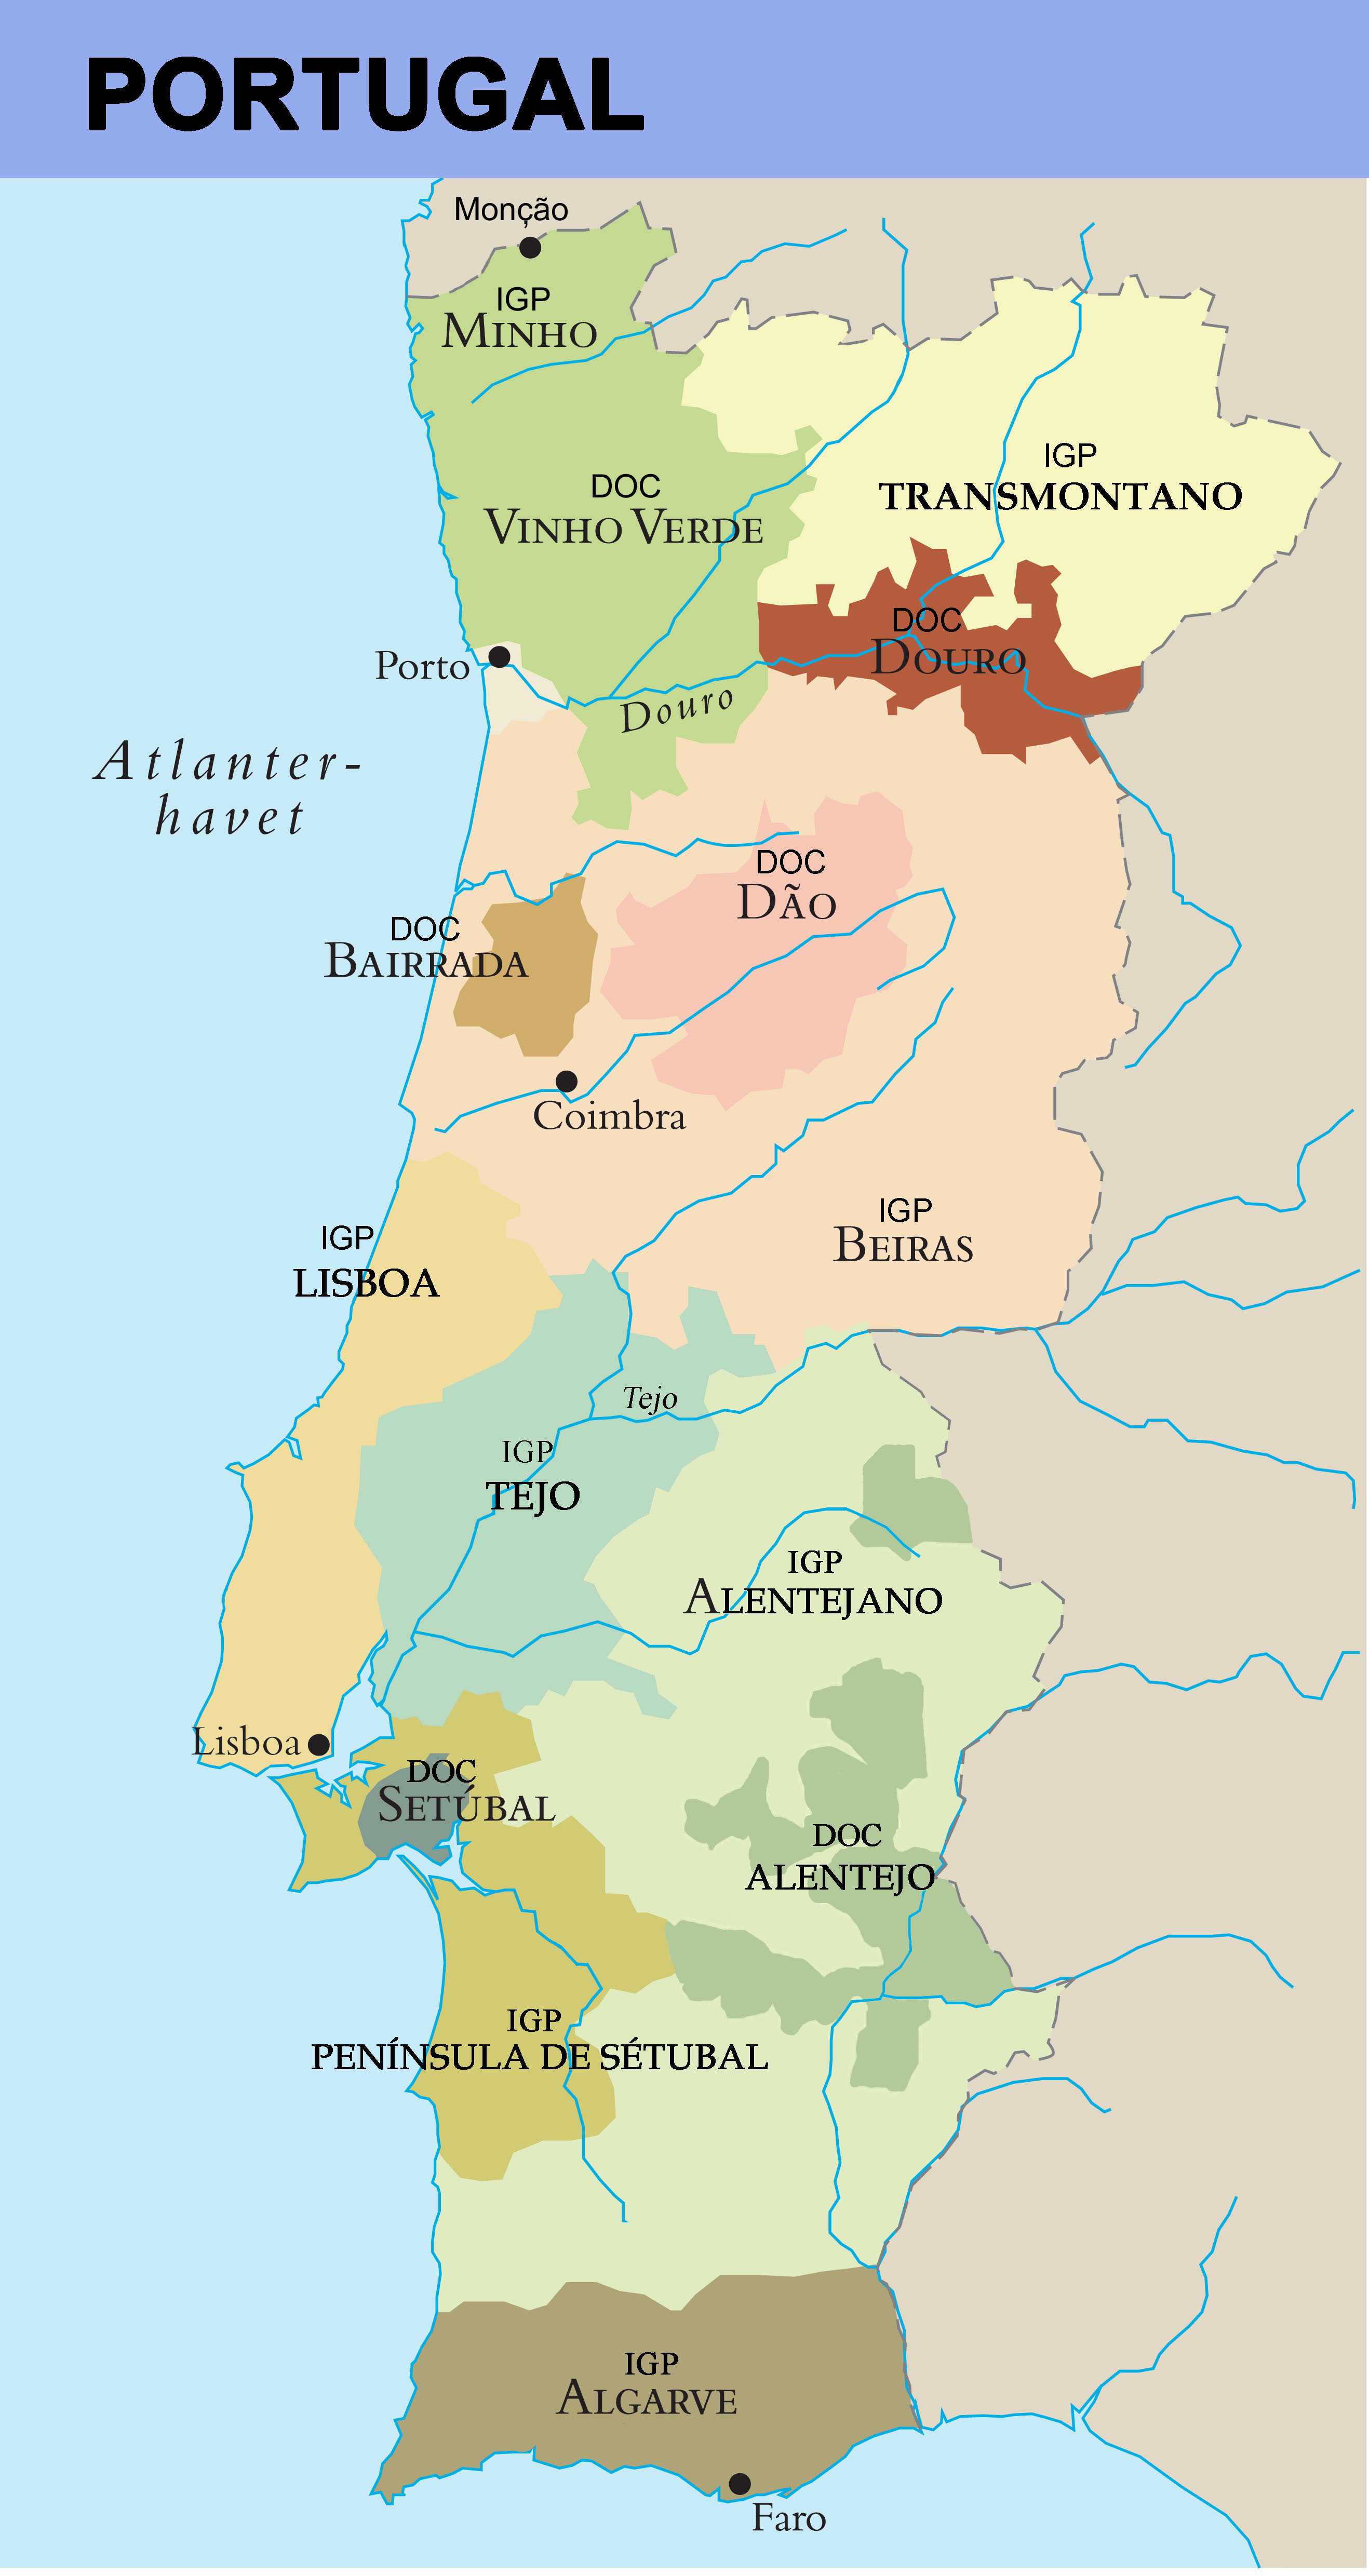 Portugal nydesign april 2013.jpg